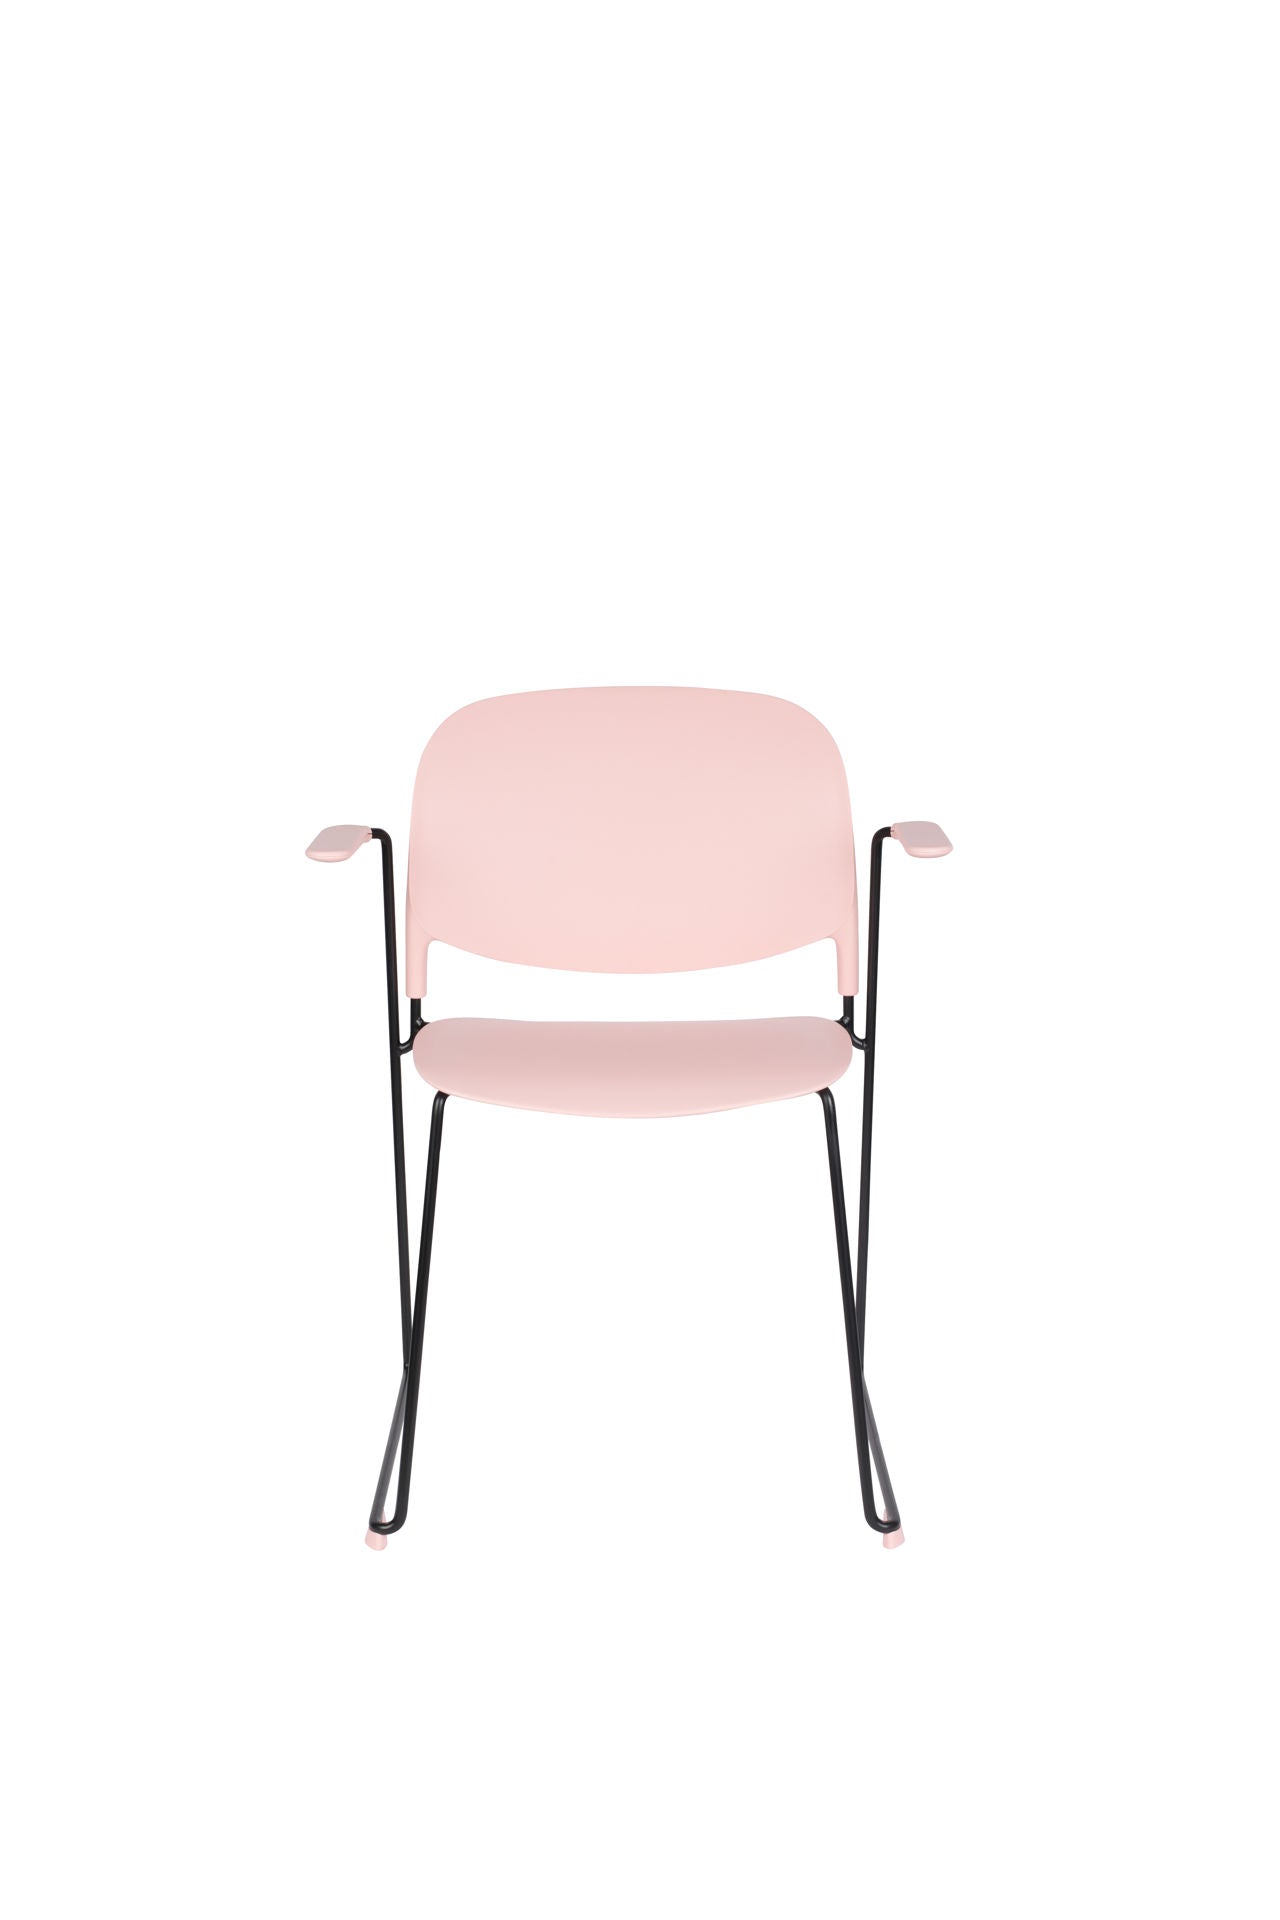 Nancy's Terrace Heights Chair - Retro - Pink, Black - Polypropylene, Steel, Plastic - 53 cm x 63.5 cm x 80.5 cm